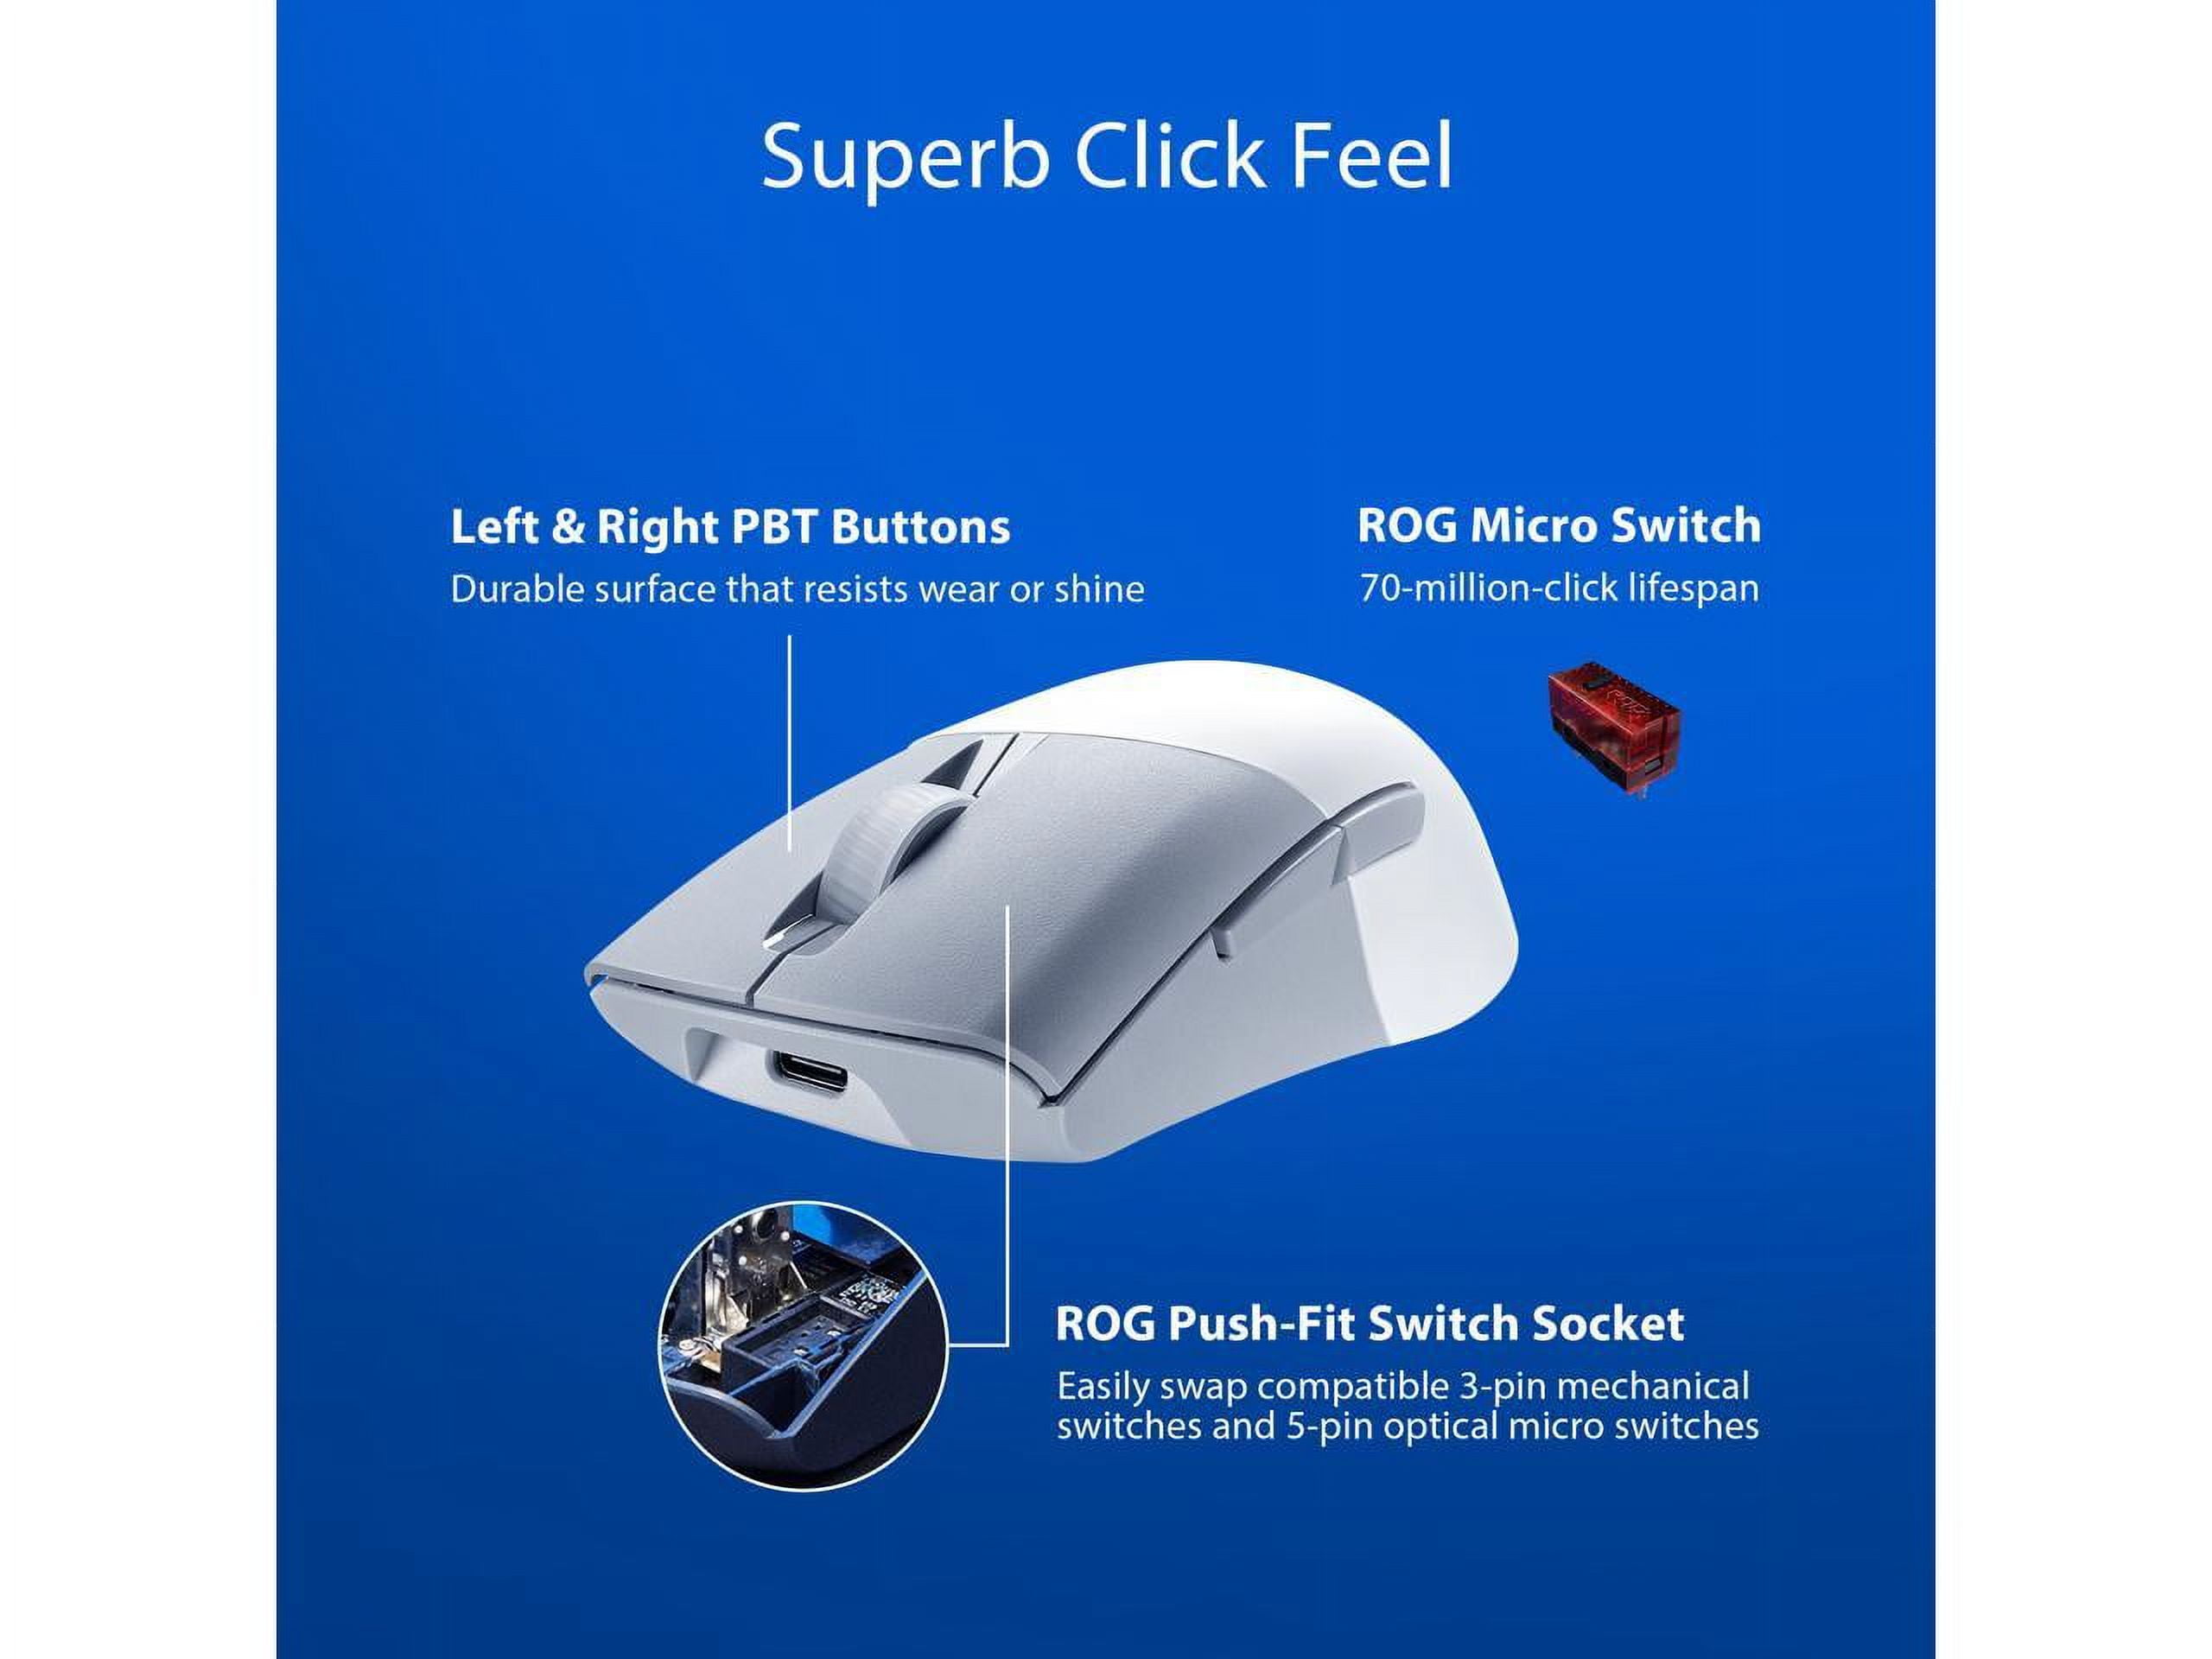 ASUS ROG Keris Wireless AimPoint souris Droitier RF Wireless + Bluetooth +  USB Type-C Optique